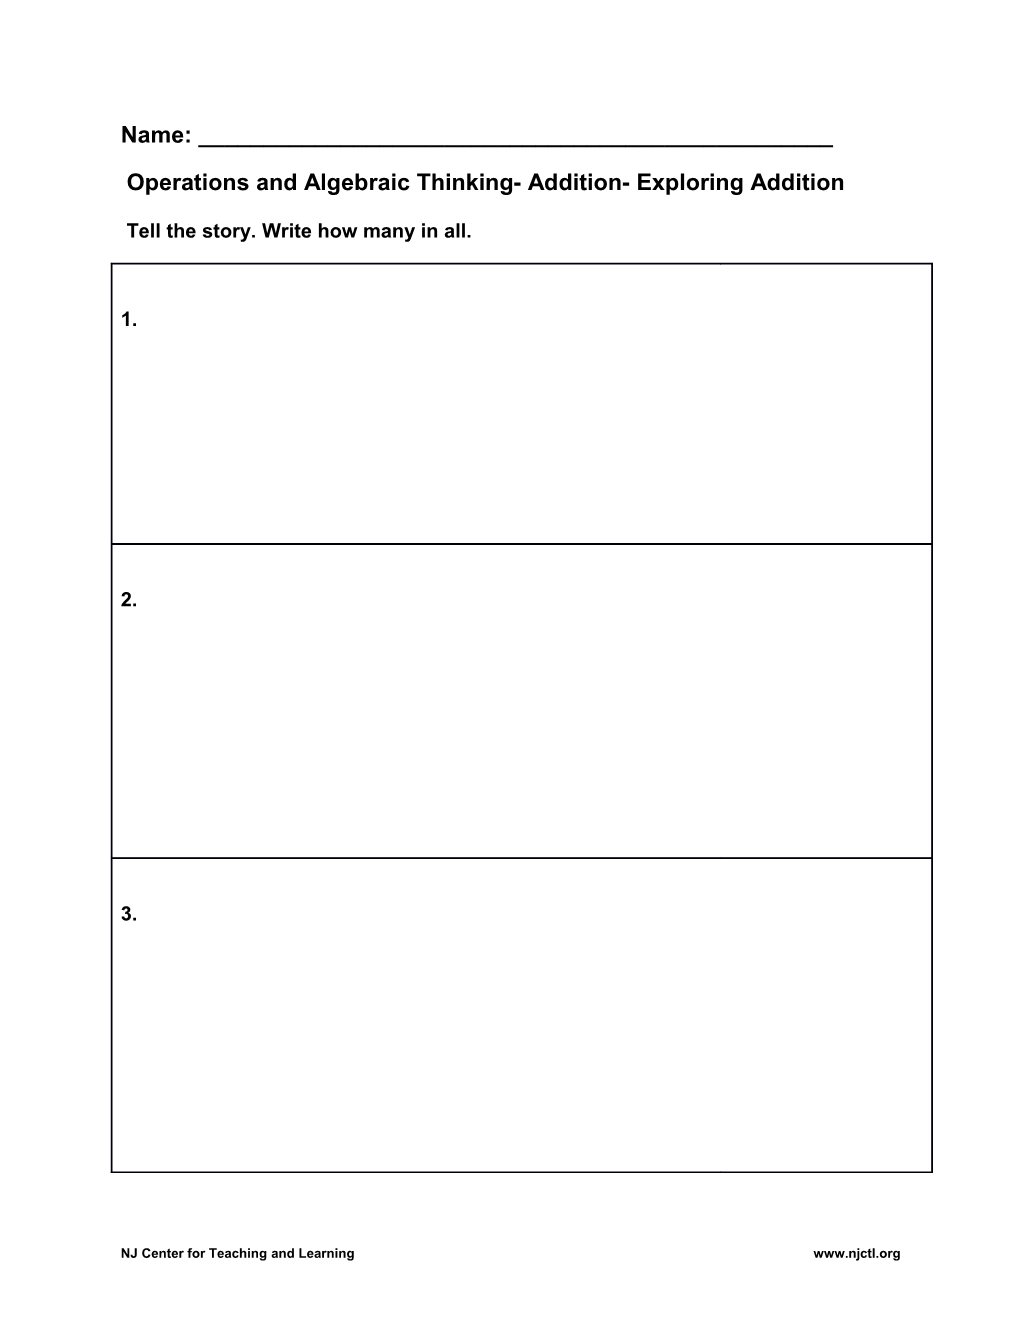 Operations and Algebraic Thinking- Addition- Exploring Addition